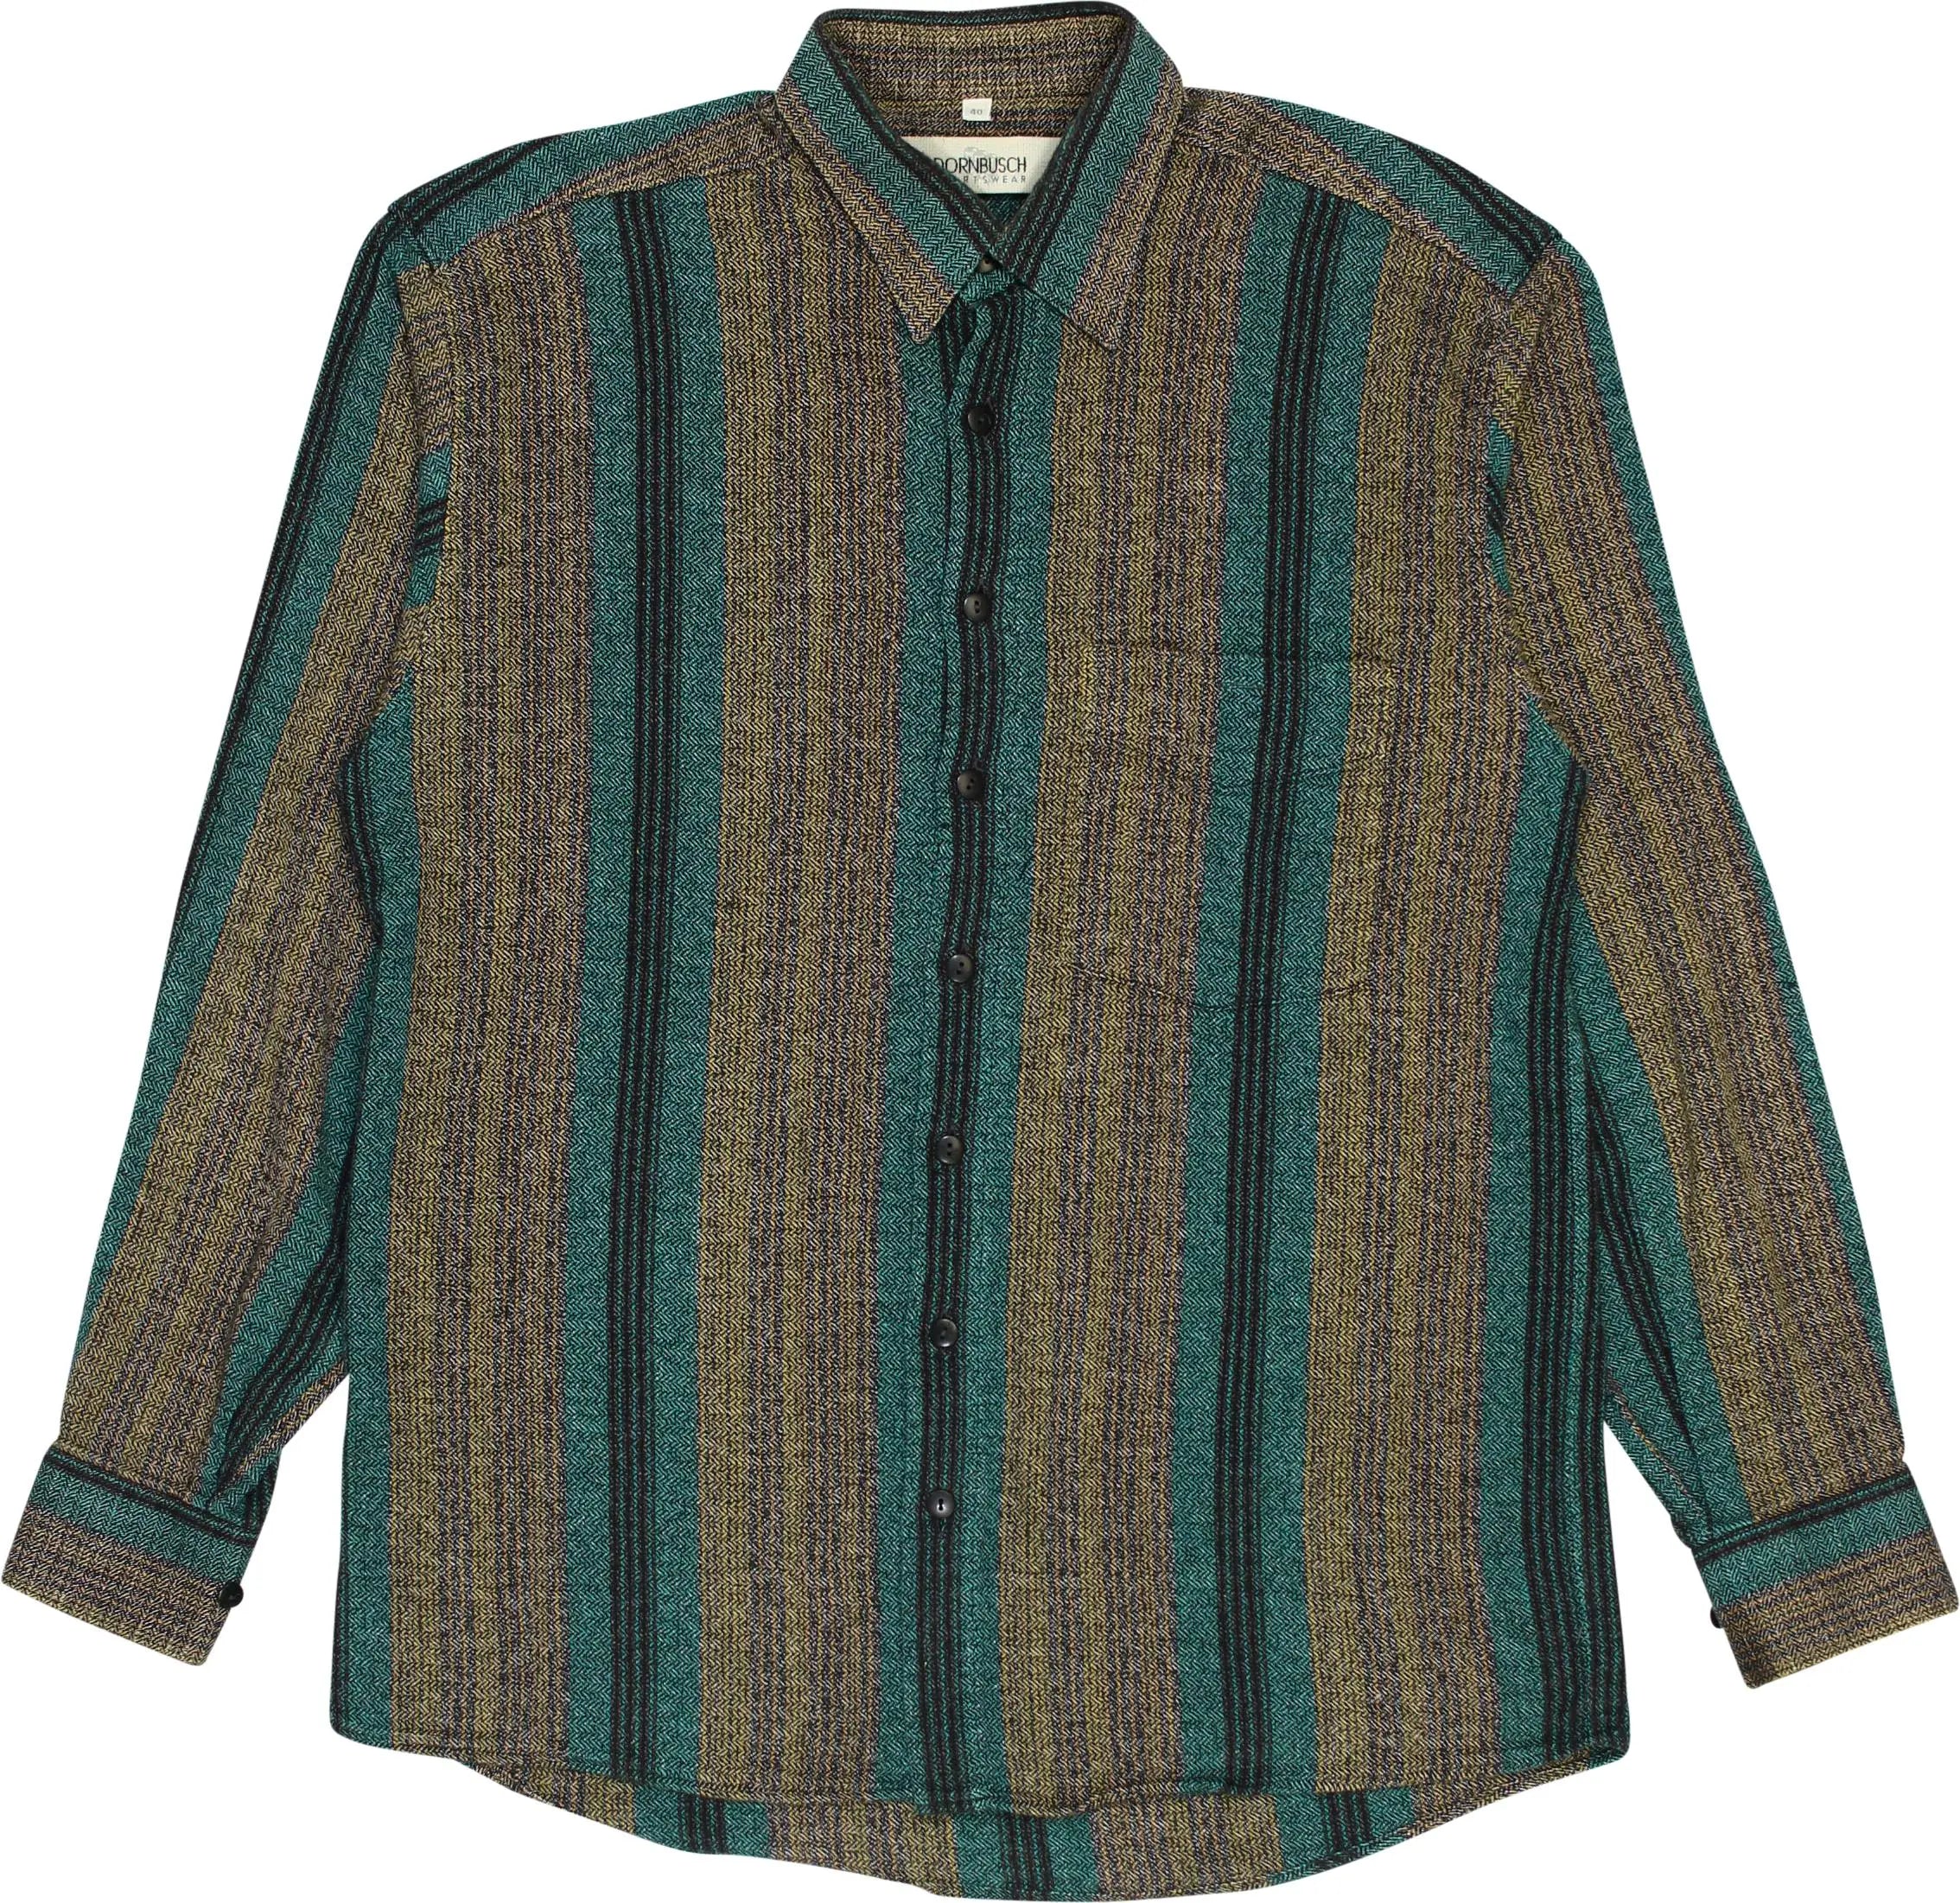 Dornbusch - Vintage Striped Shirt- ThriftTale.com - Vintage and second handclothing